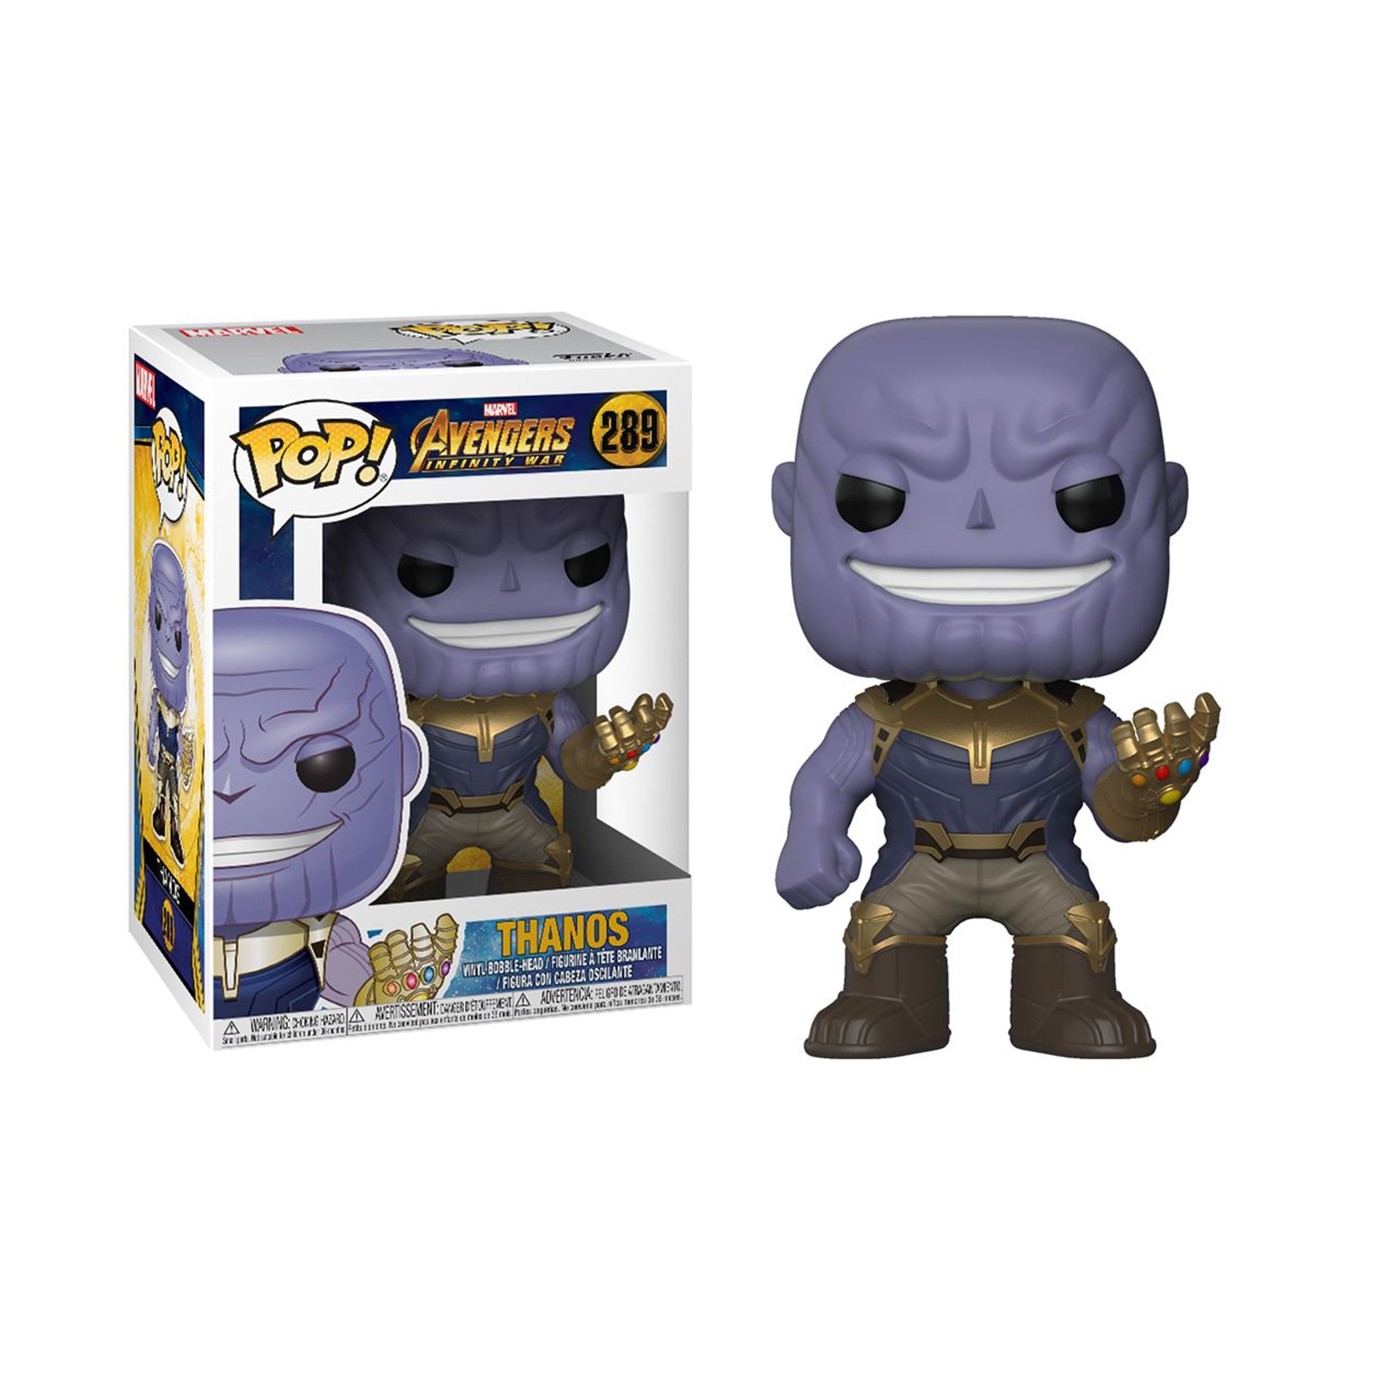 Avengers Infinity War Thanos Funko Pop Bobble Head